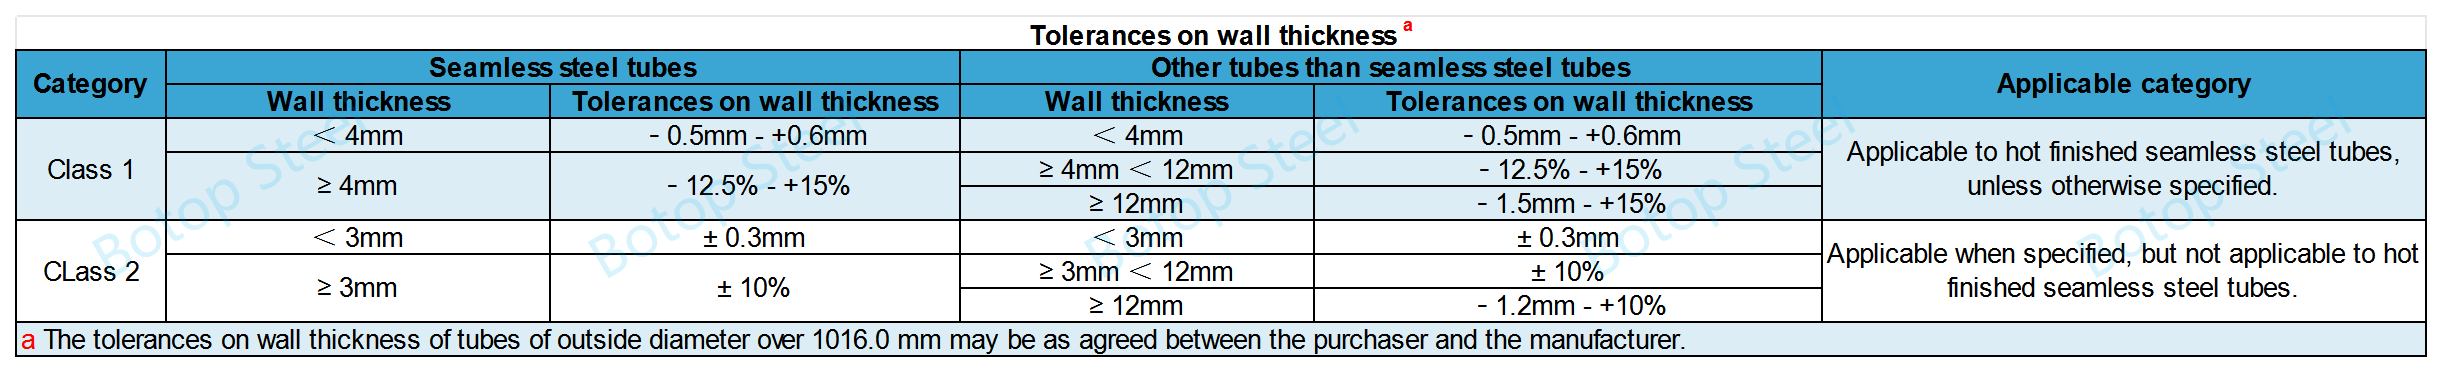 jis g 3444 Tolerances on wall thickness